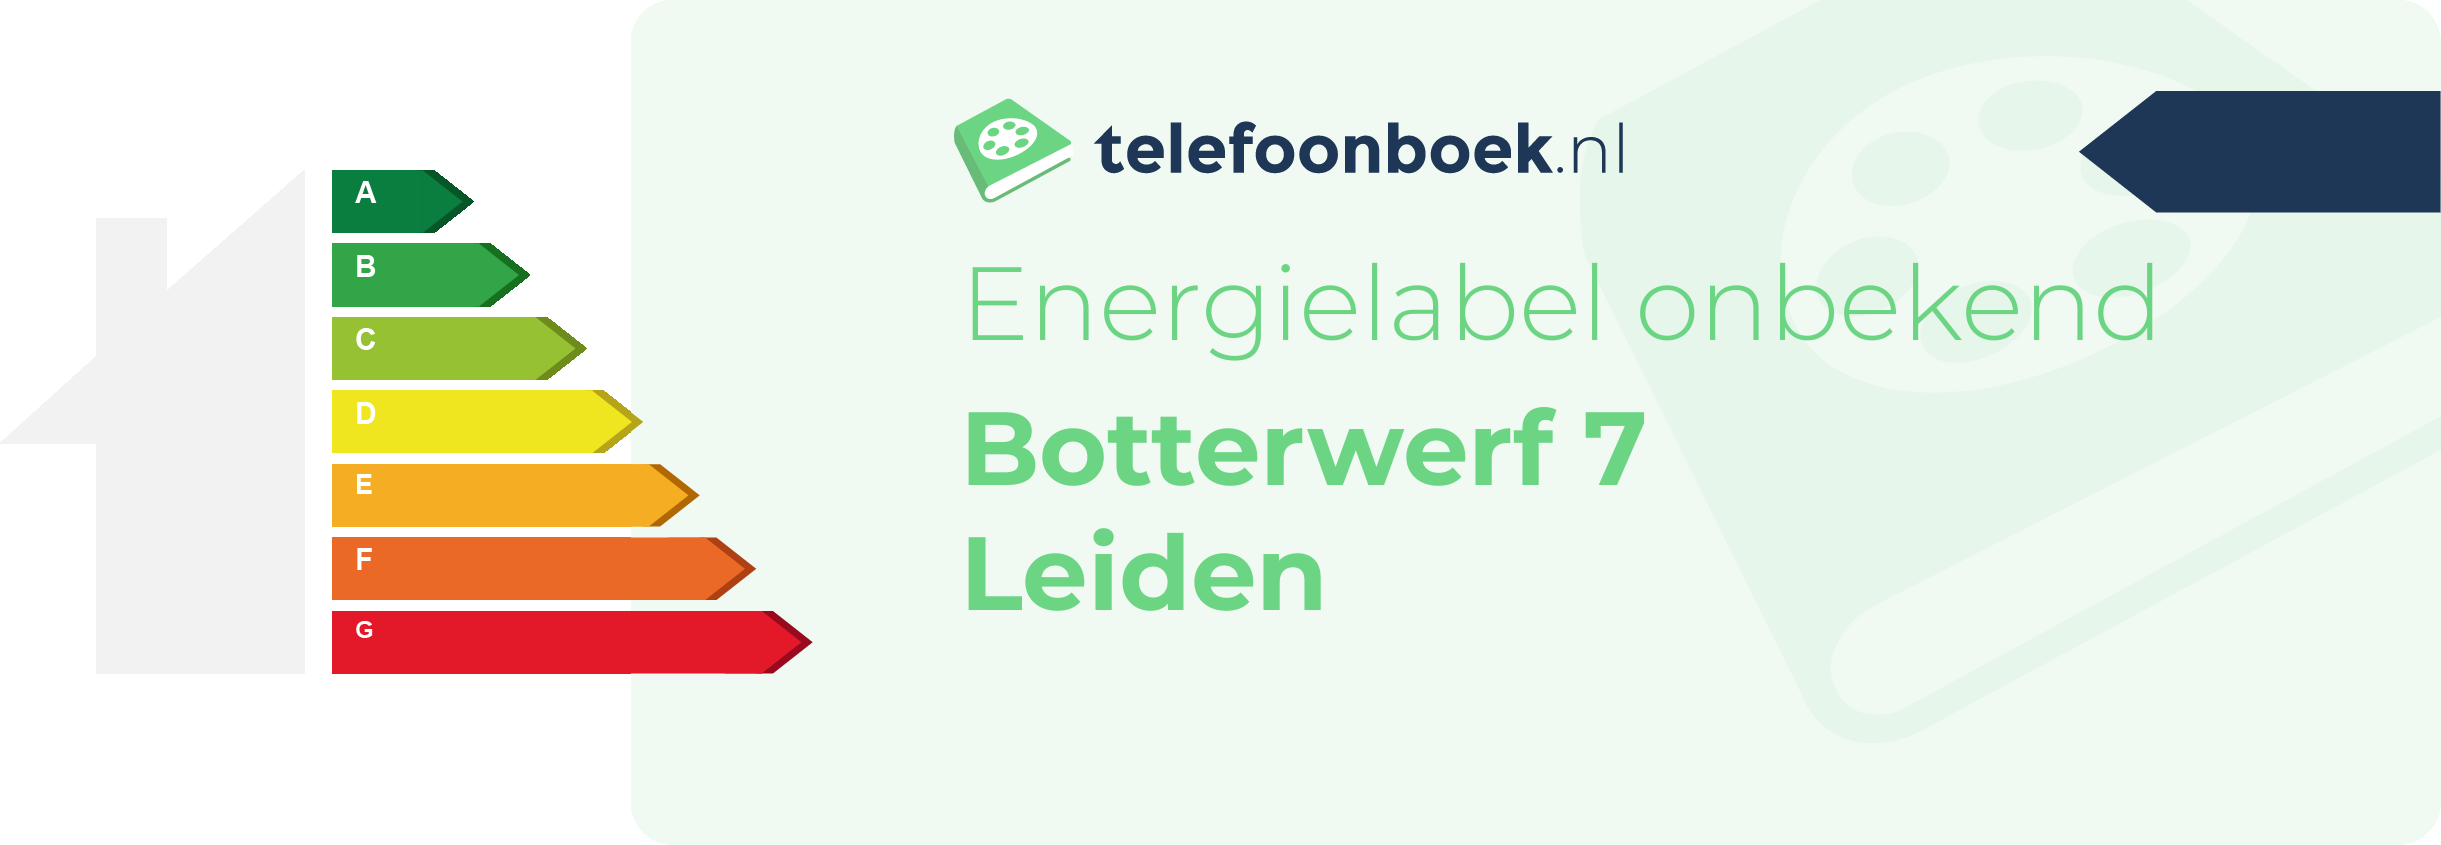 Energielabel Botterwerf 7 Leiden